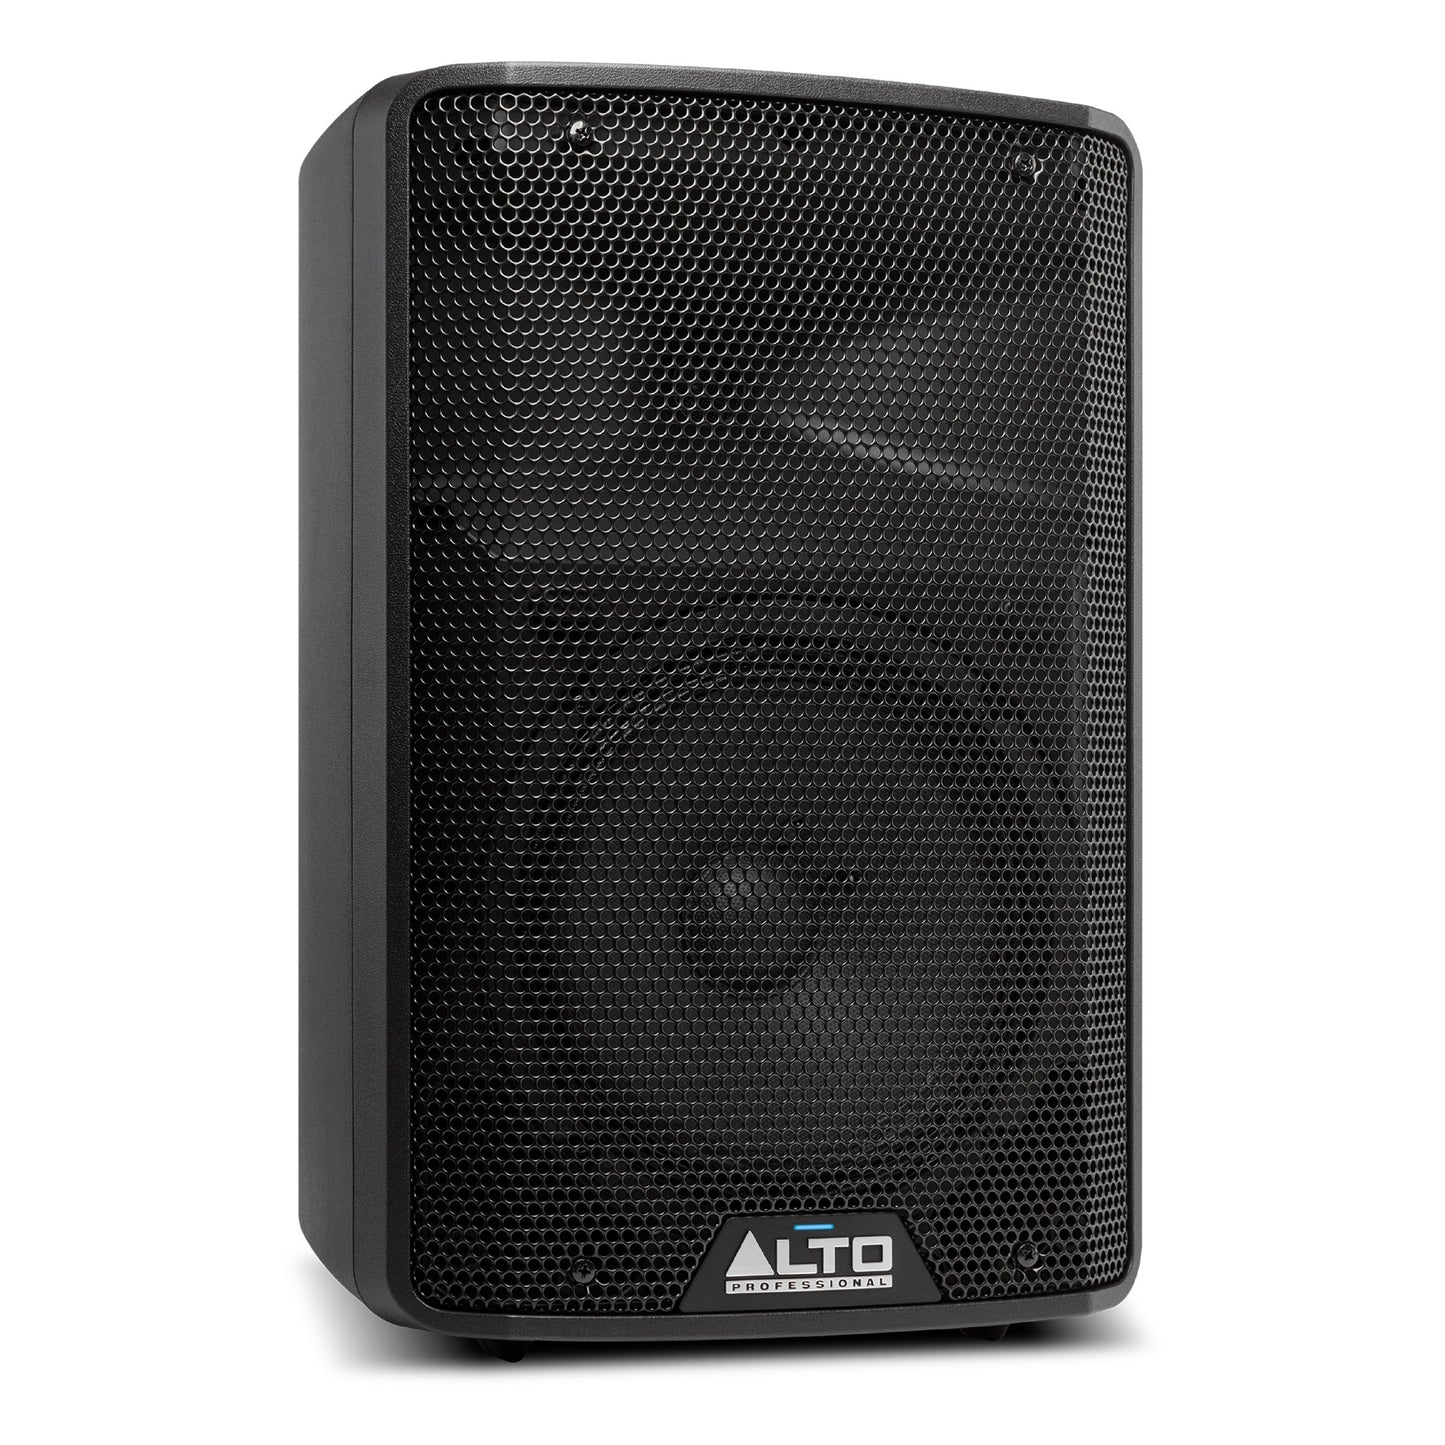 Alto Professional TX308 - 350-Watt 8-Inch 2-Way Powered Loudspeaker